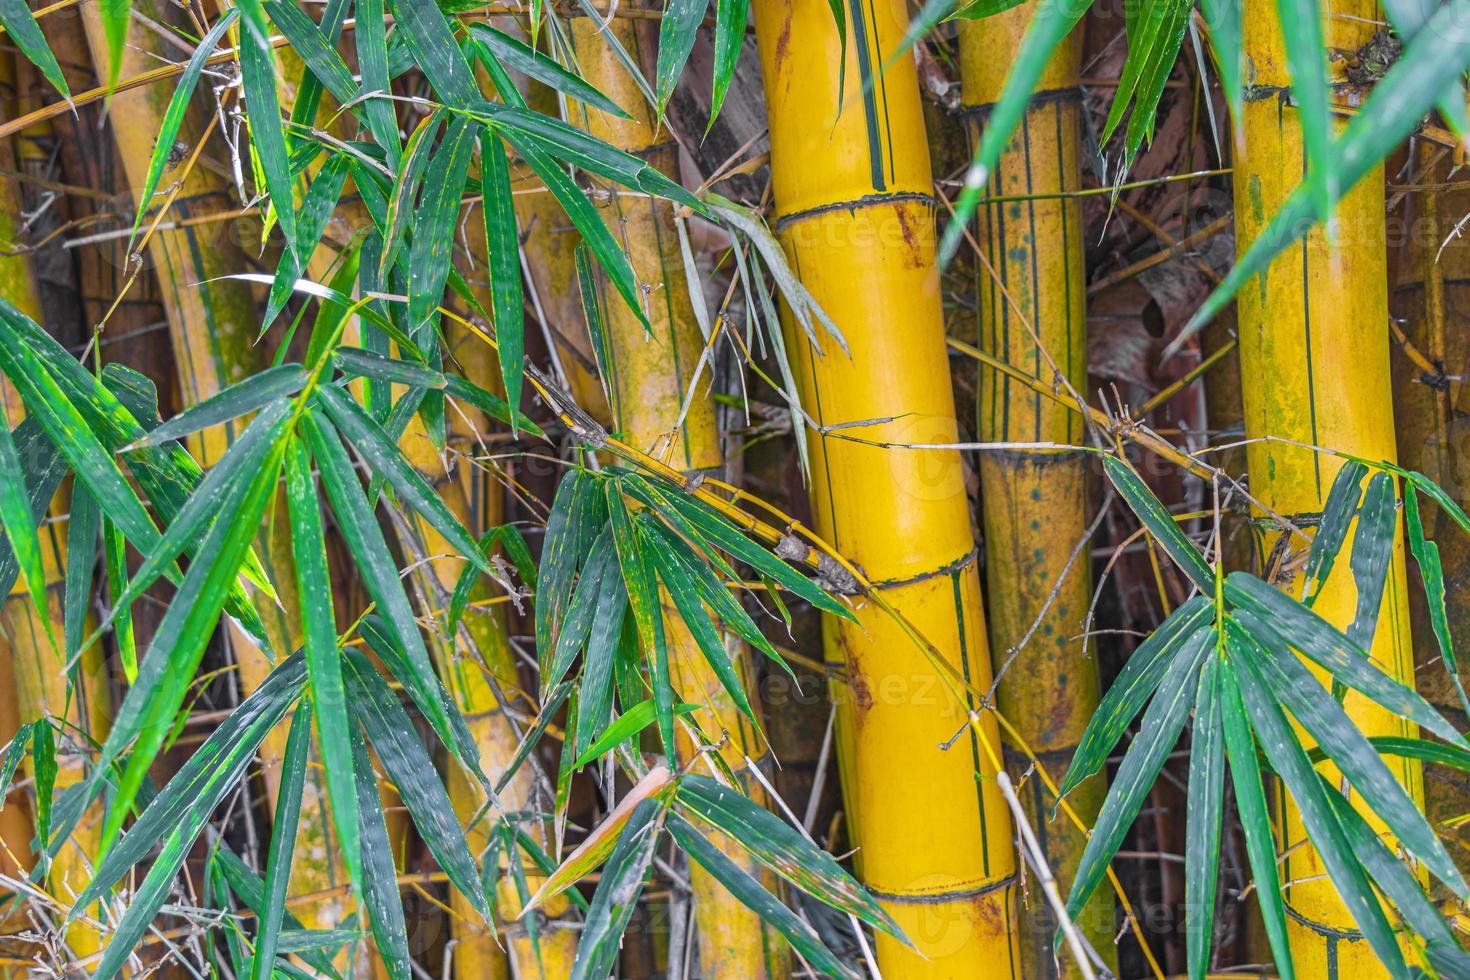 arbres de bambou vert jaune forêt tropicale san jose costa rica. photo